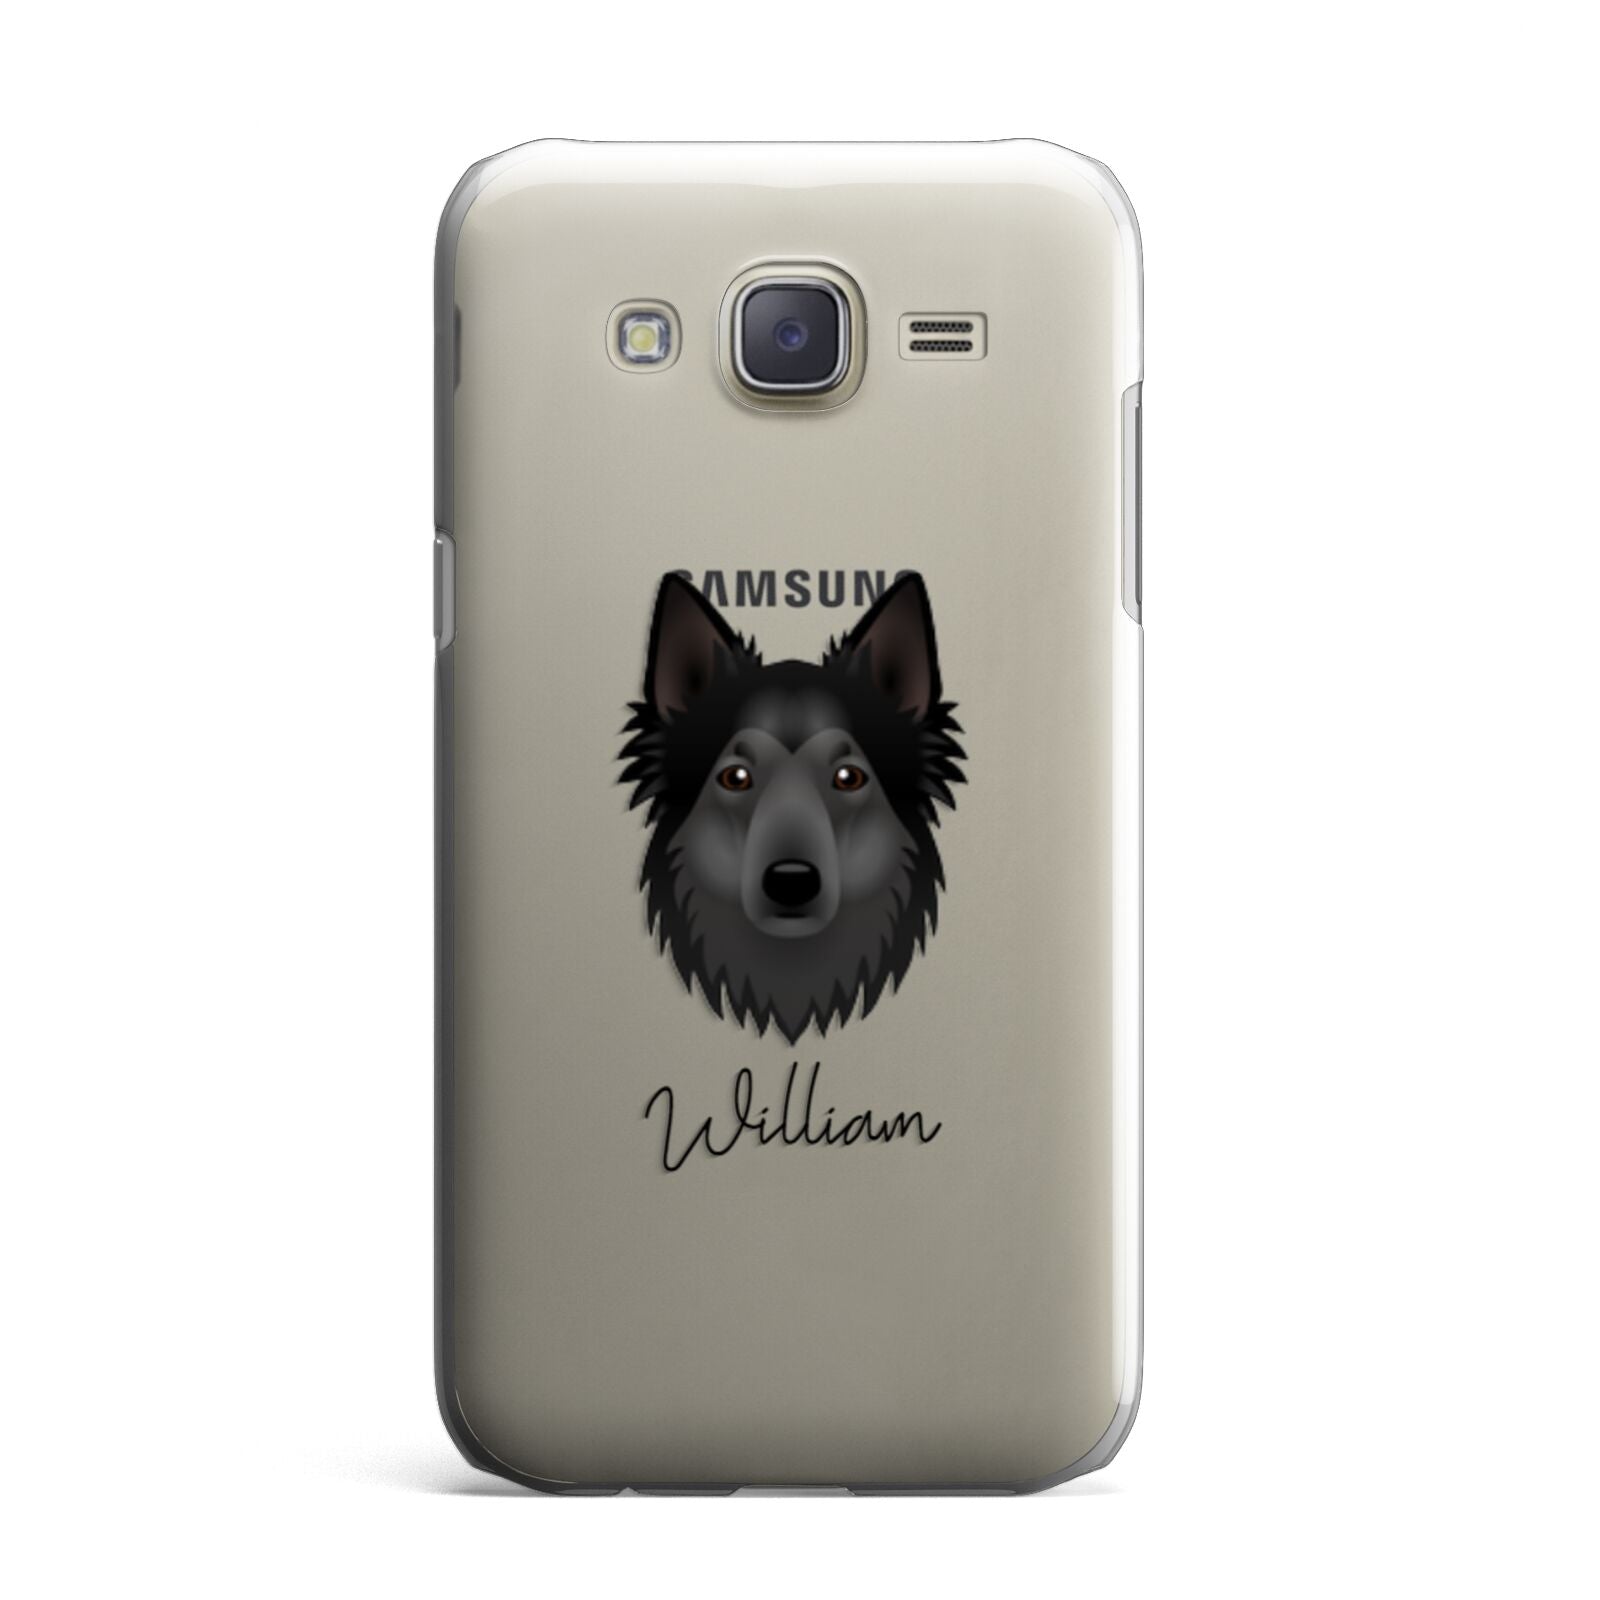 Shollie Personalised Samsung Galaxy J7 Case